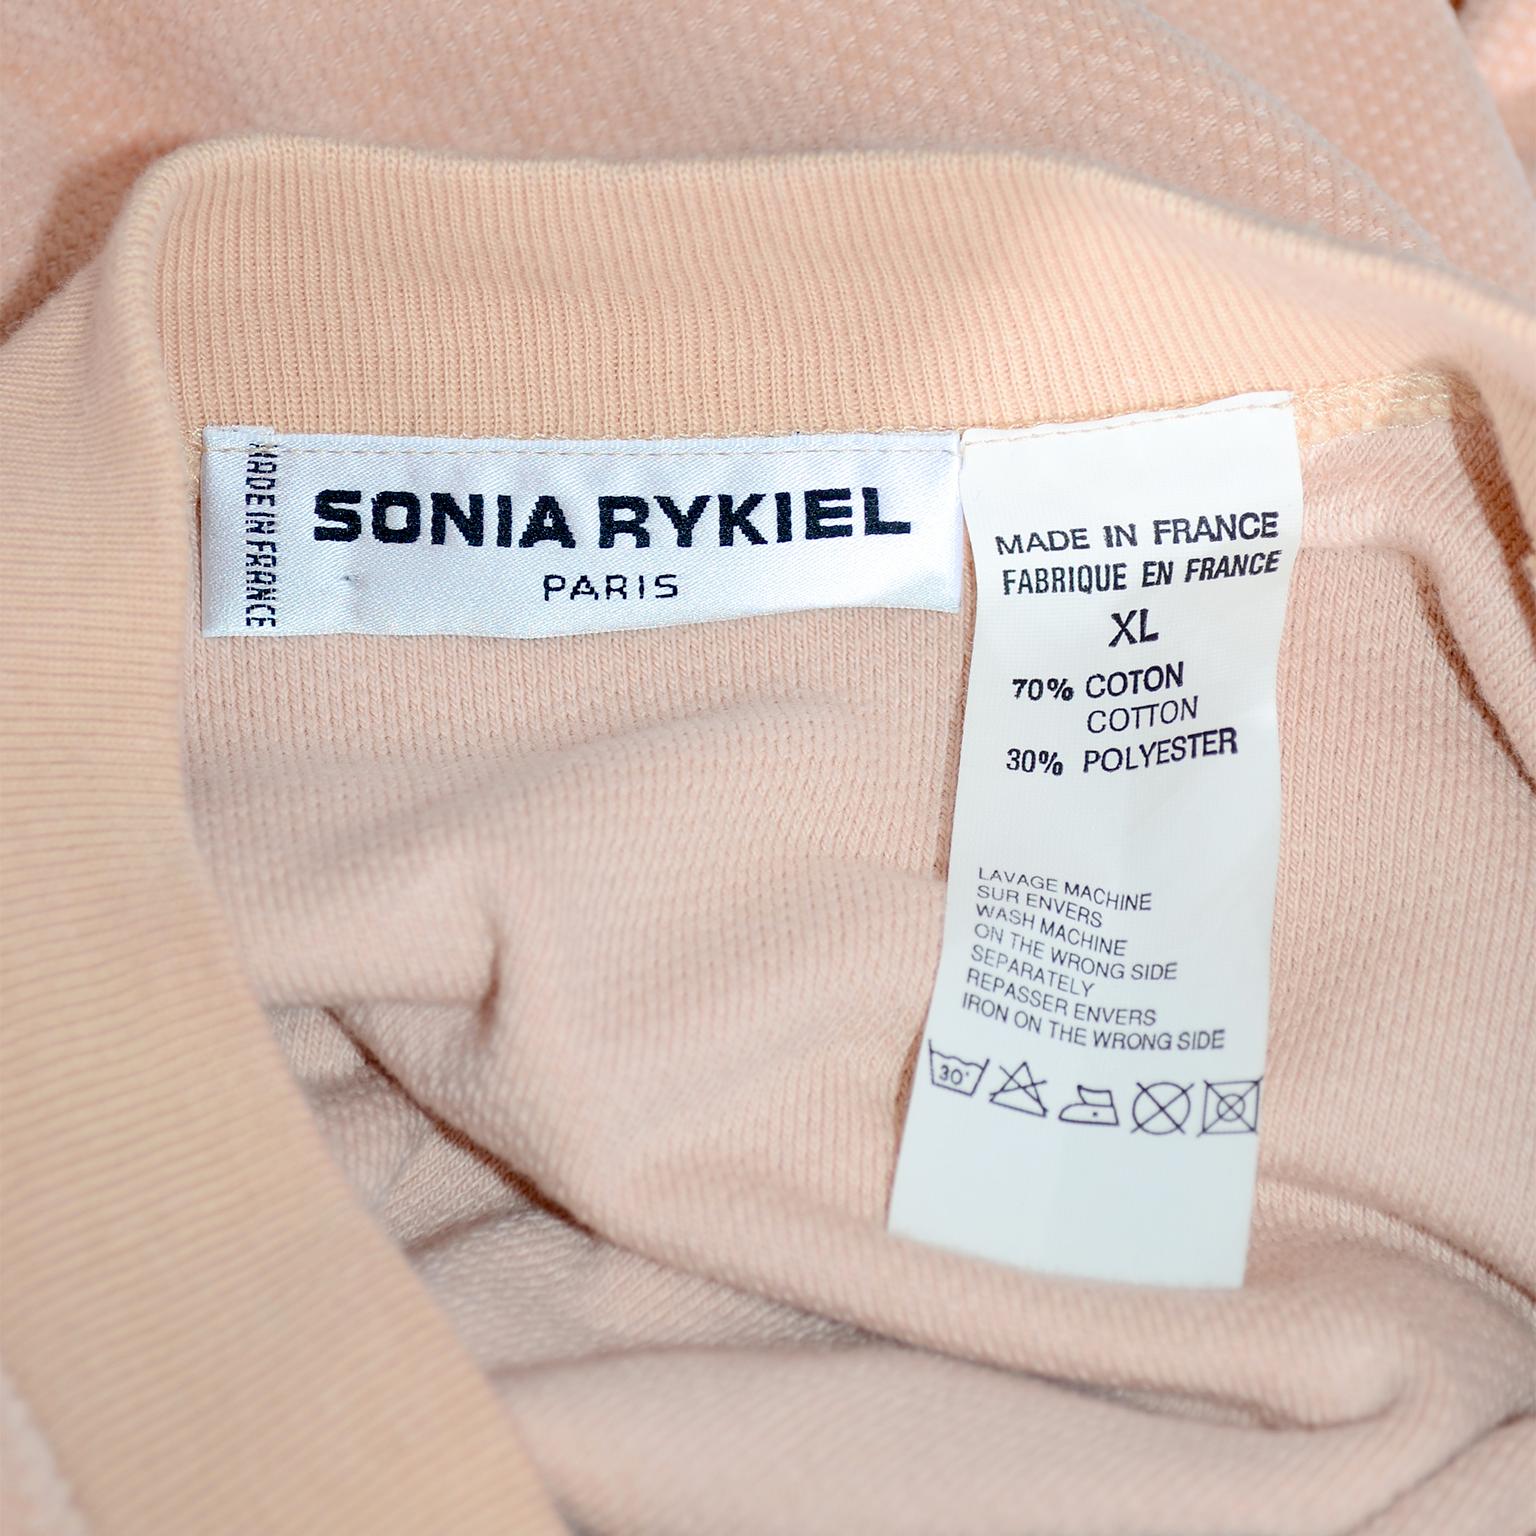 Sonia Rykiel Paris Vintage Peach Tracksuit Cozy Athleisure Outfit W Pants & Top 6